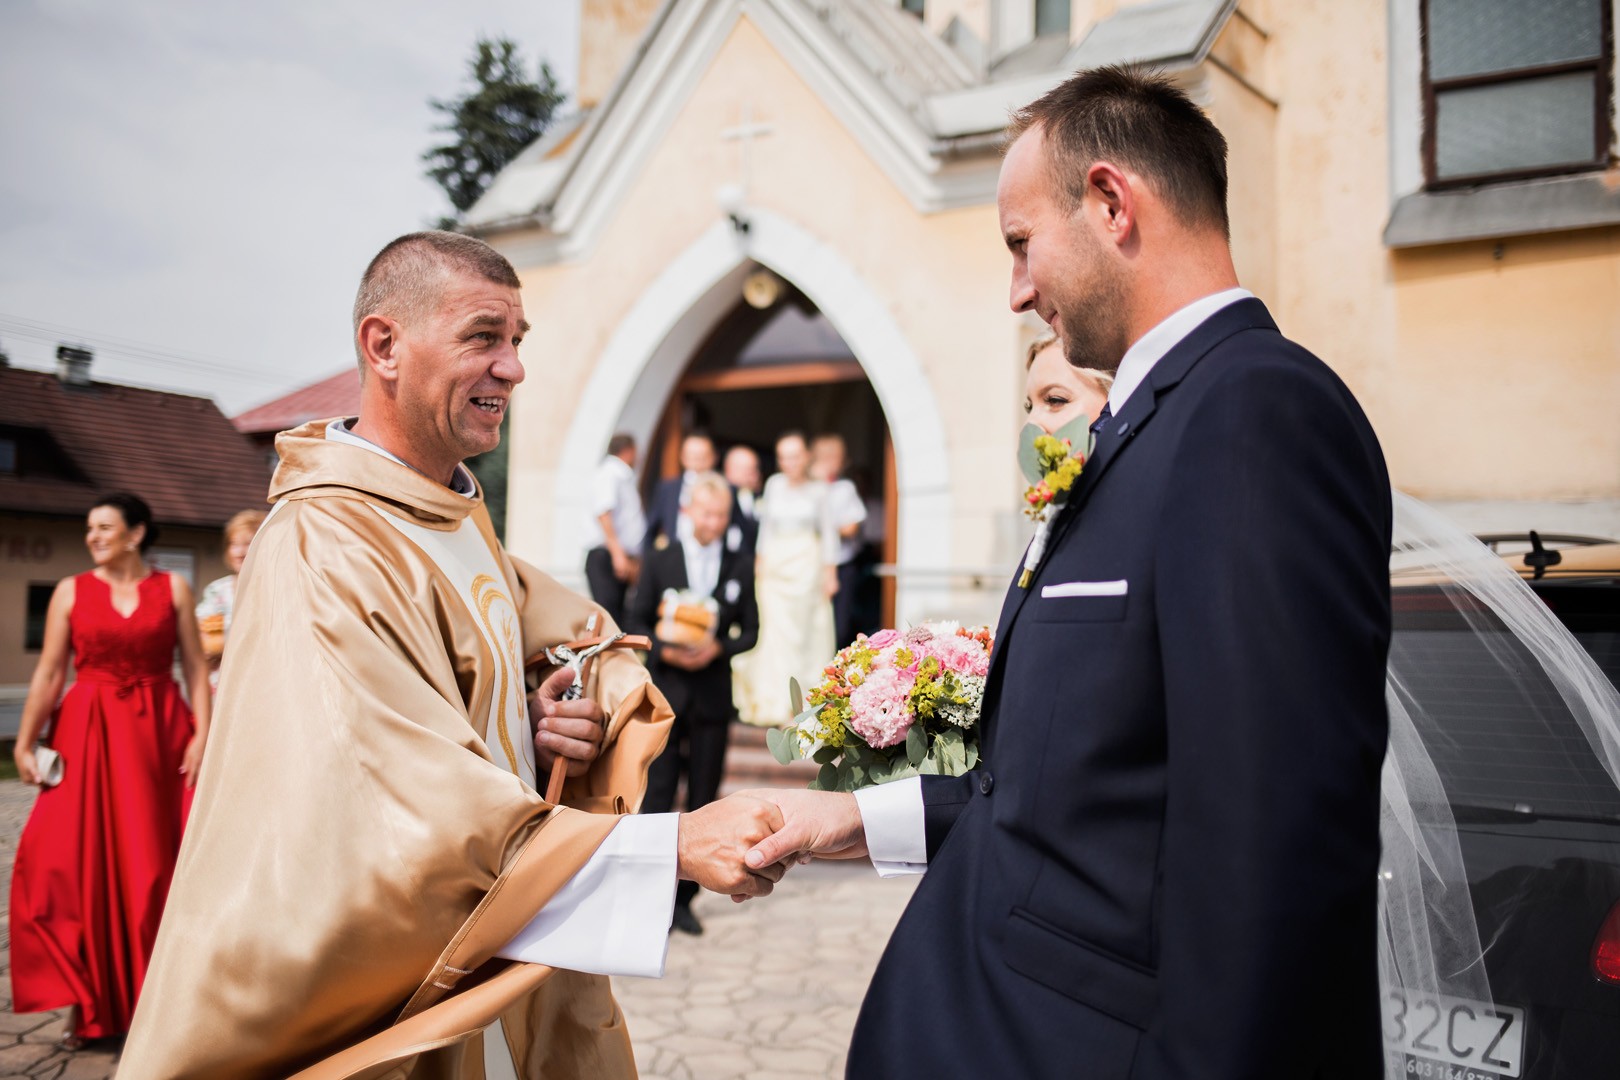 Wedding photos from the wedding day of Miška and Stanka. - 0279.jpg